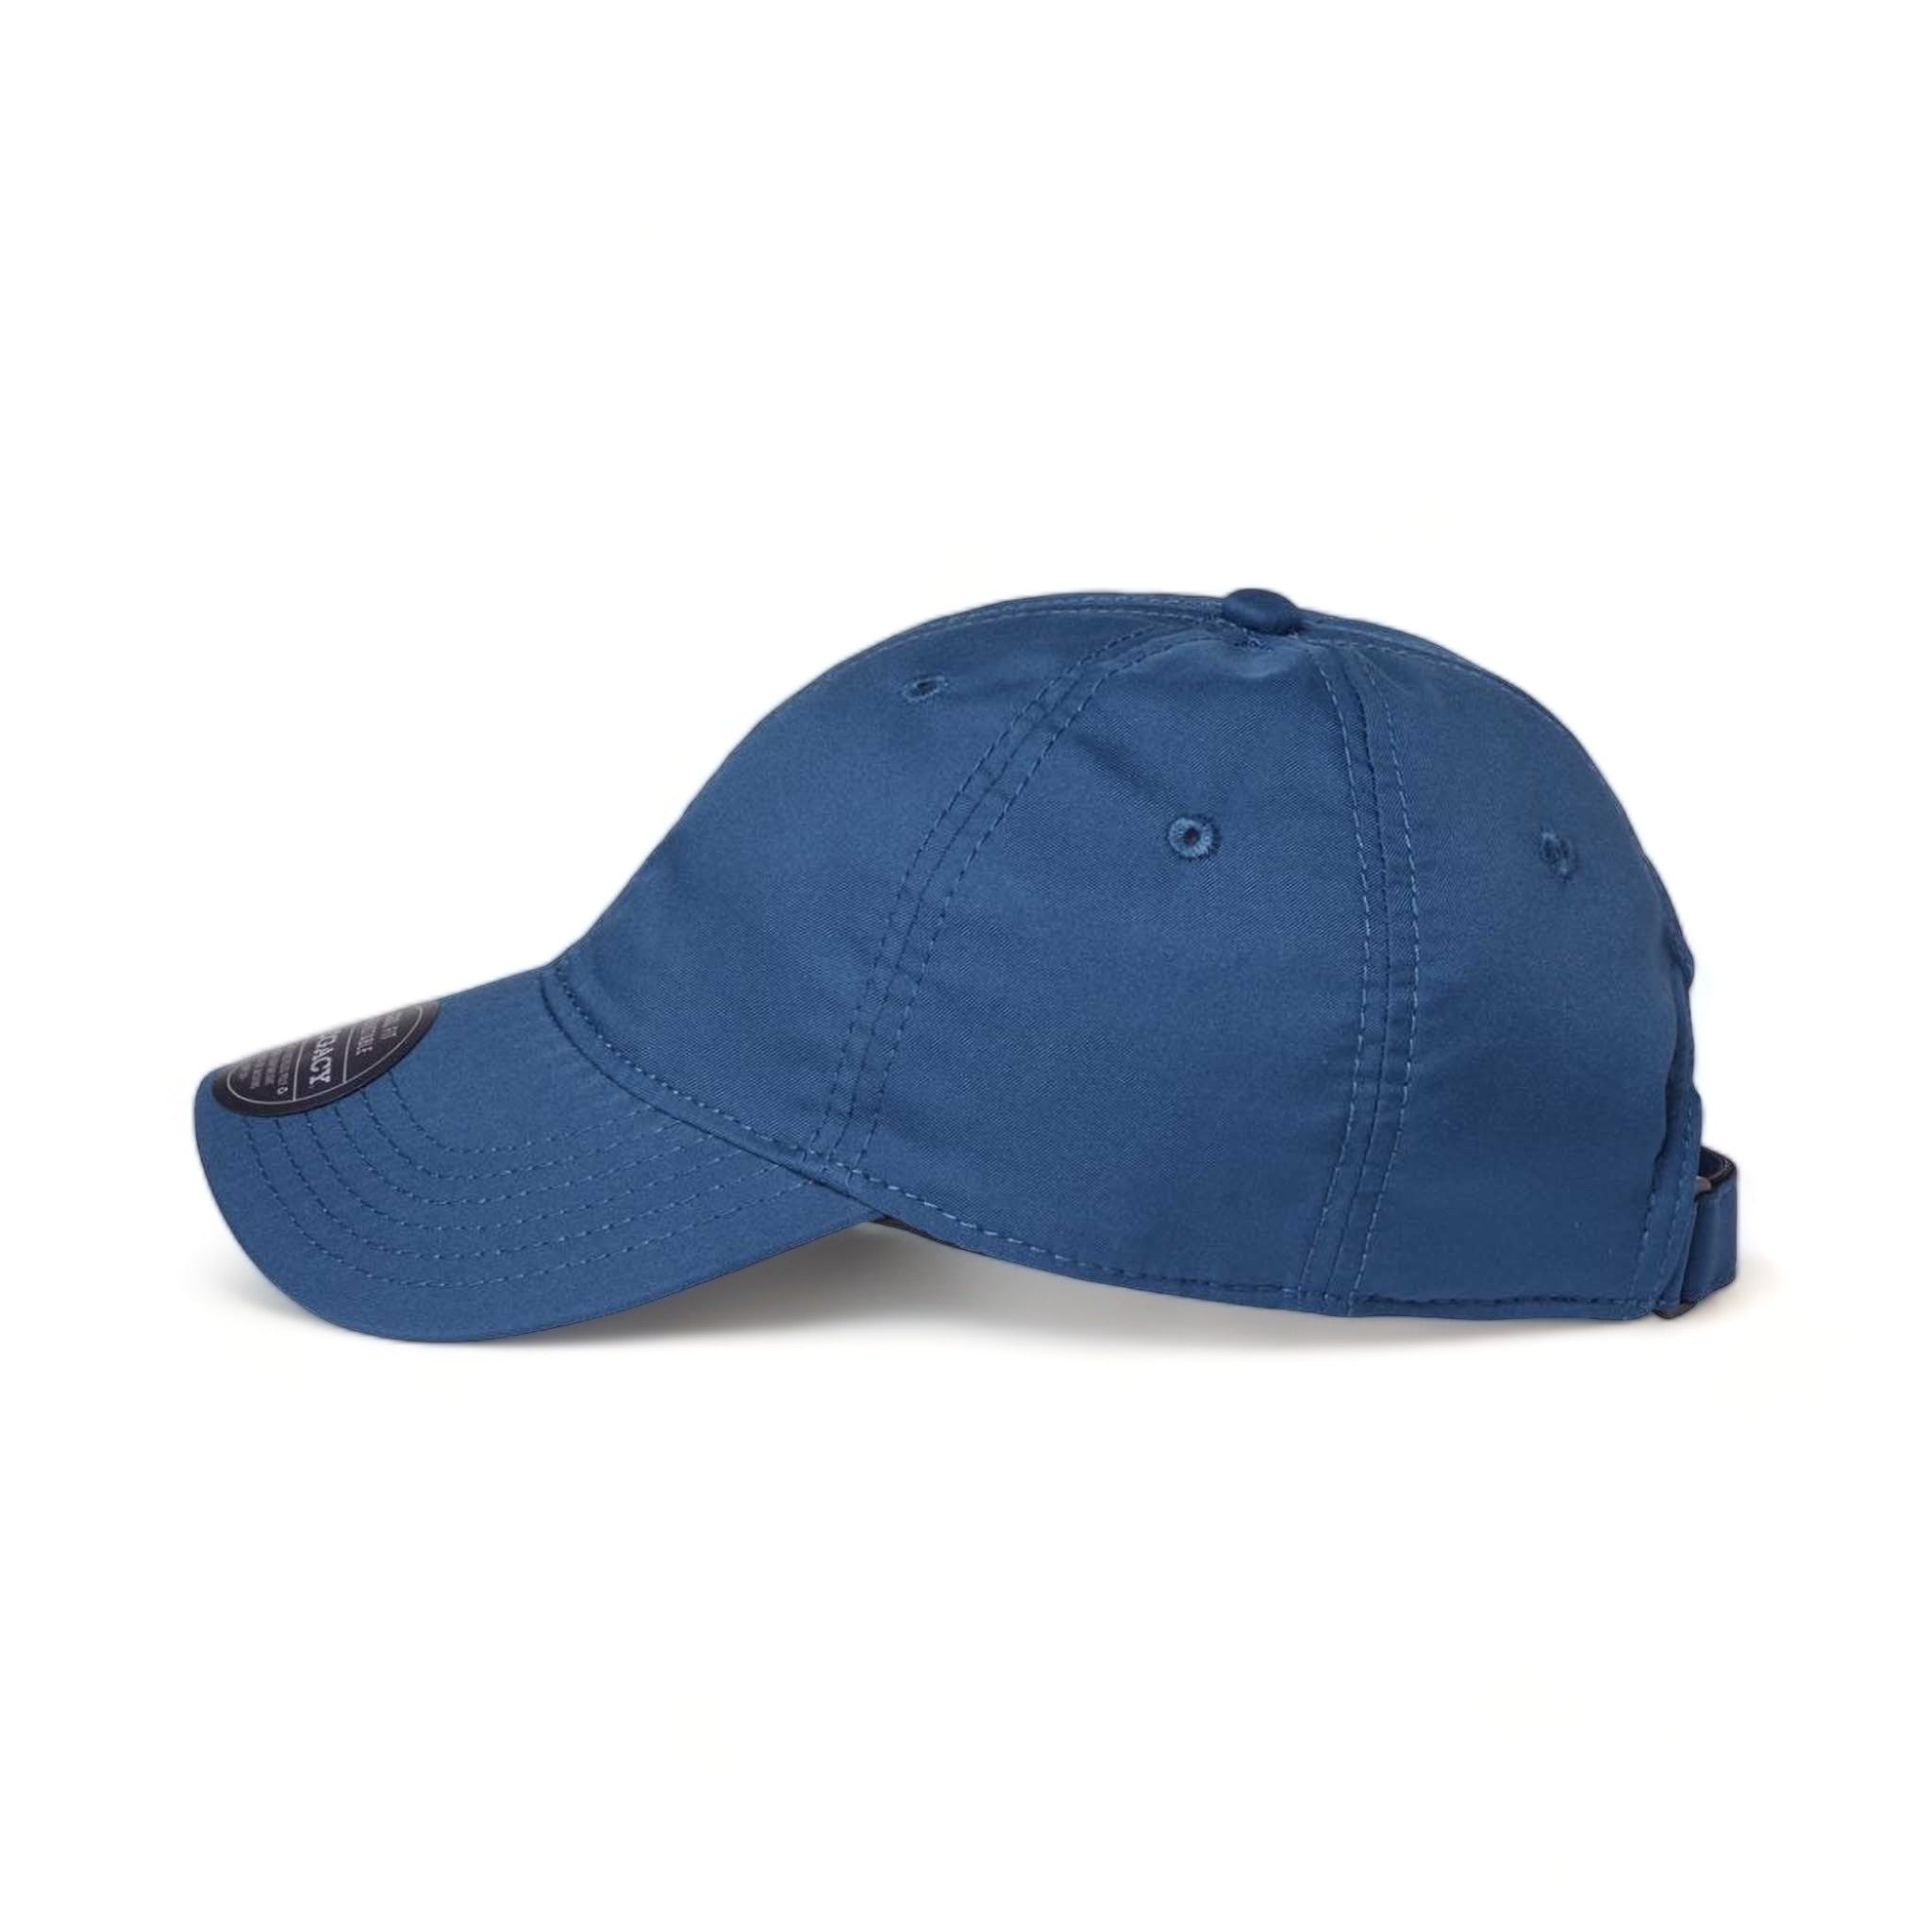 Side view of LEGACY CFA custom hat in dark blue